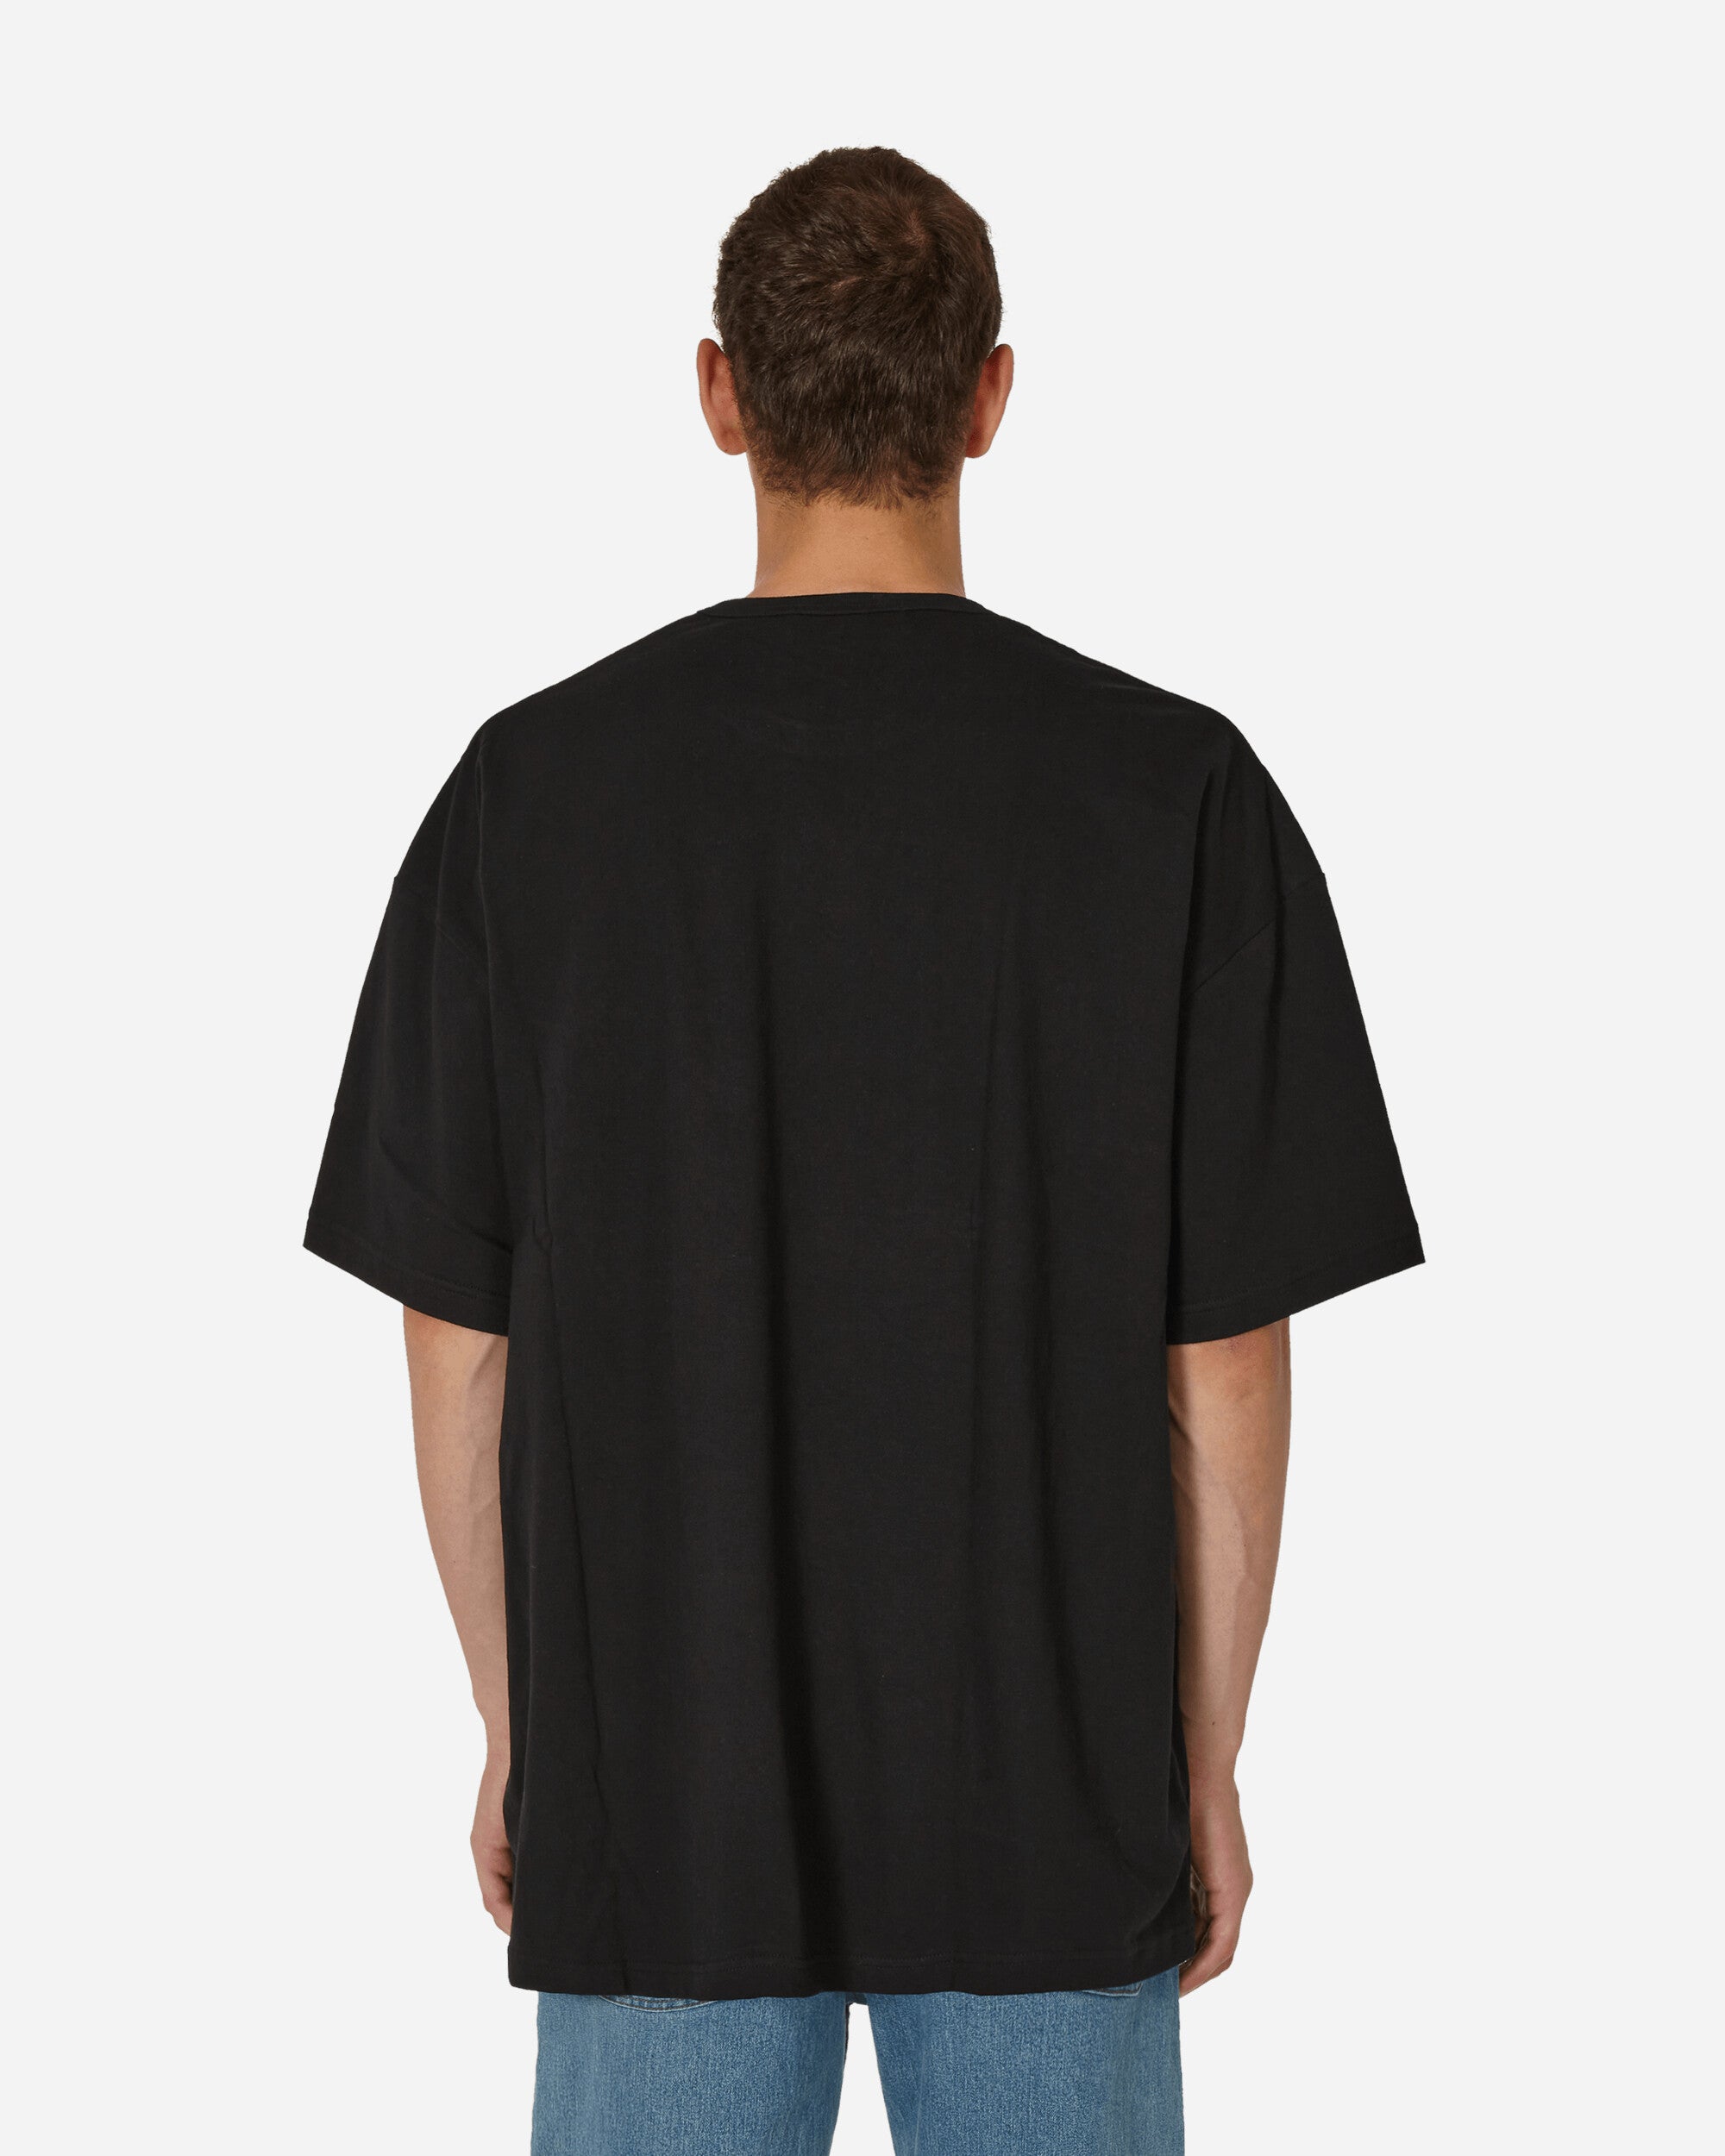 Comme Des Garçons Black T-Shirt Black T-Shirts Shortsleeve 1L-T101-W23 1